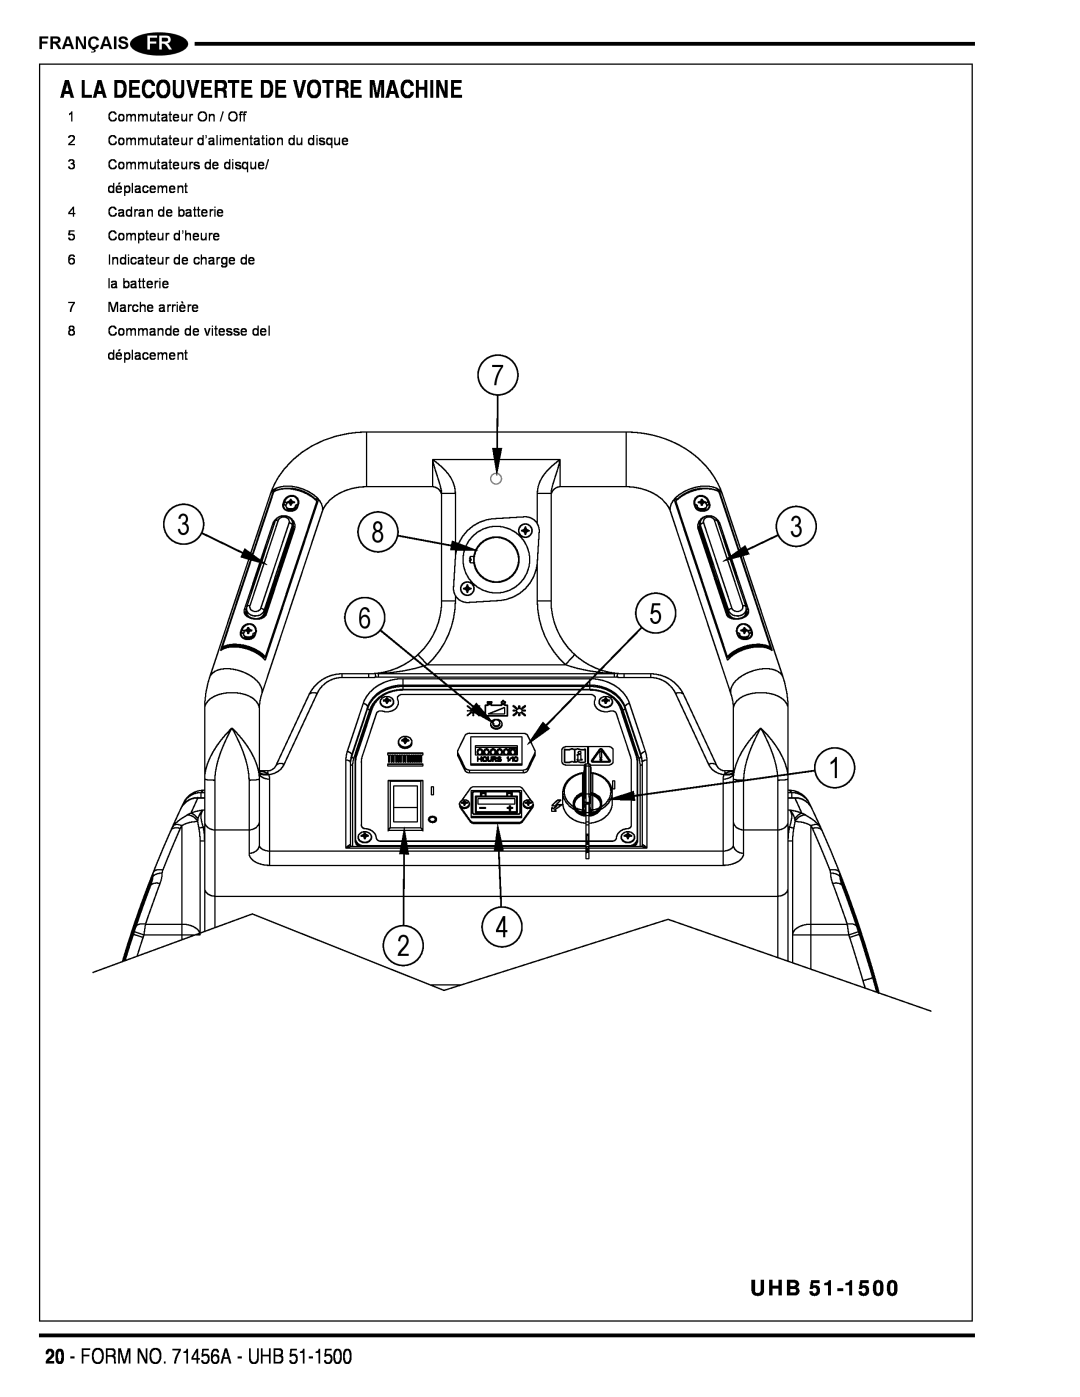 Nilfisk-Advance America 01610A manual A La Decouverte De Votre Machine, Français Fr, FORM NO. 71456A - UHB 